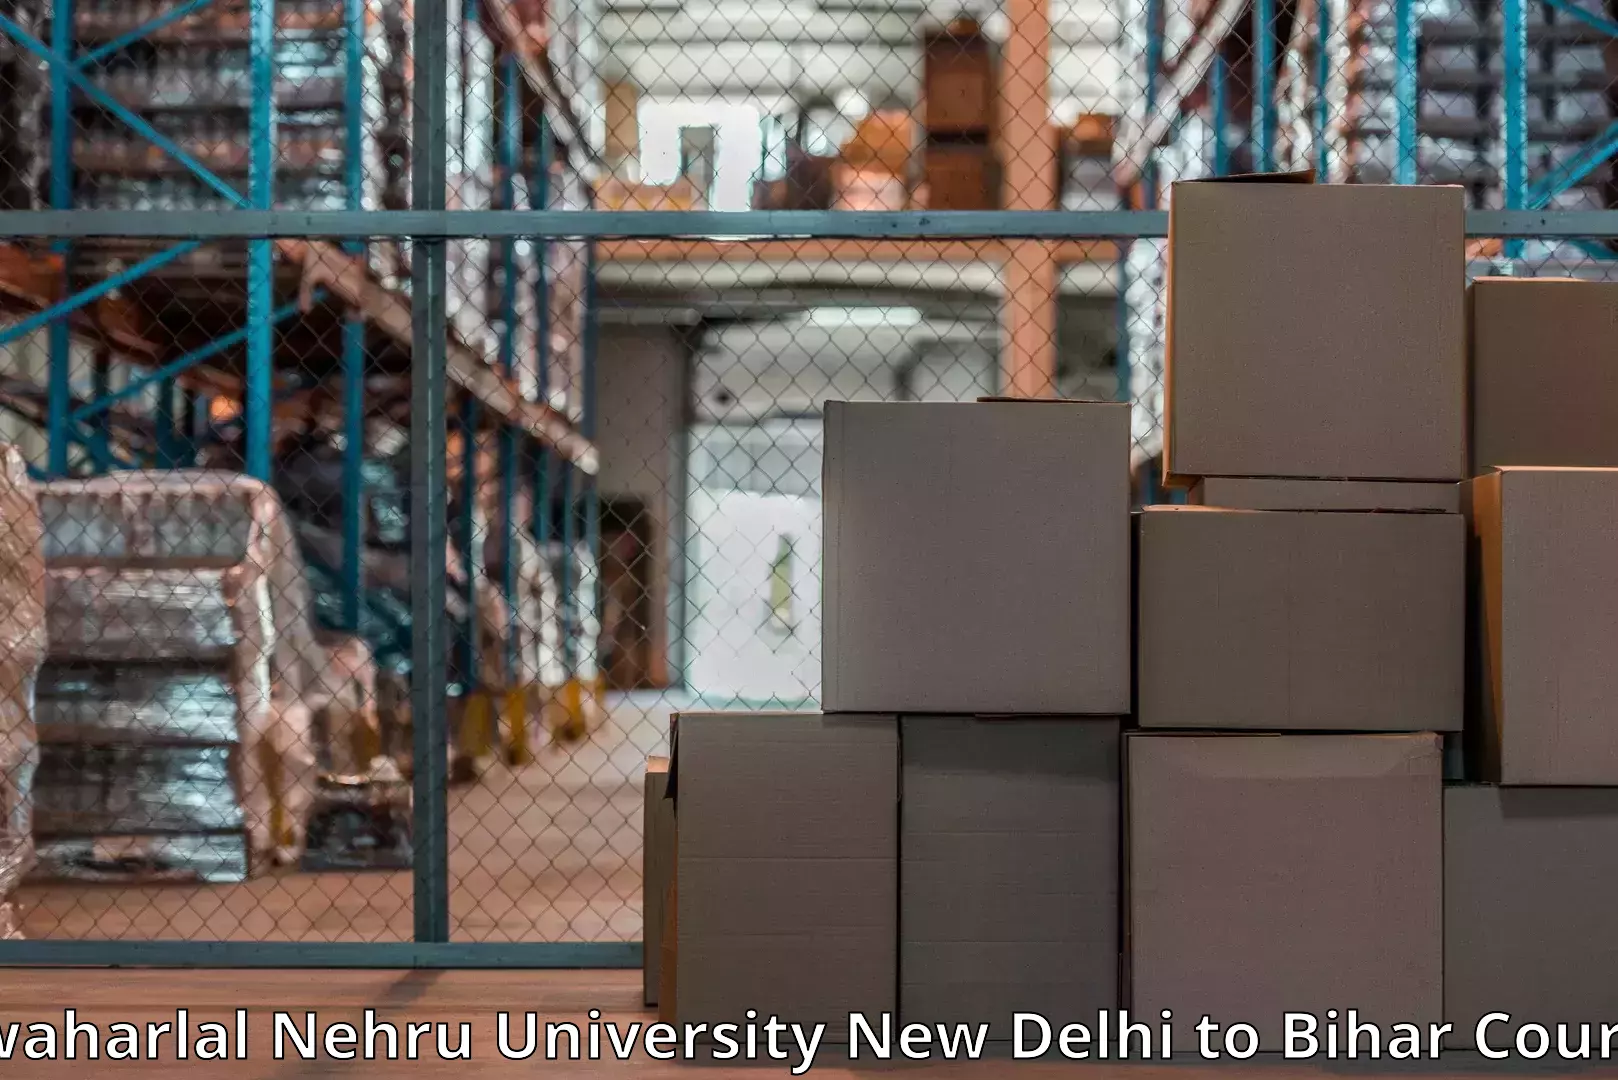 Furniture relocation experts Jawaharlal Nehru University New Delhi to Bihar